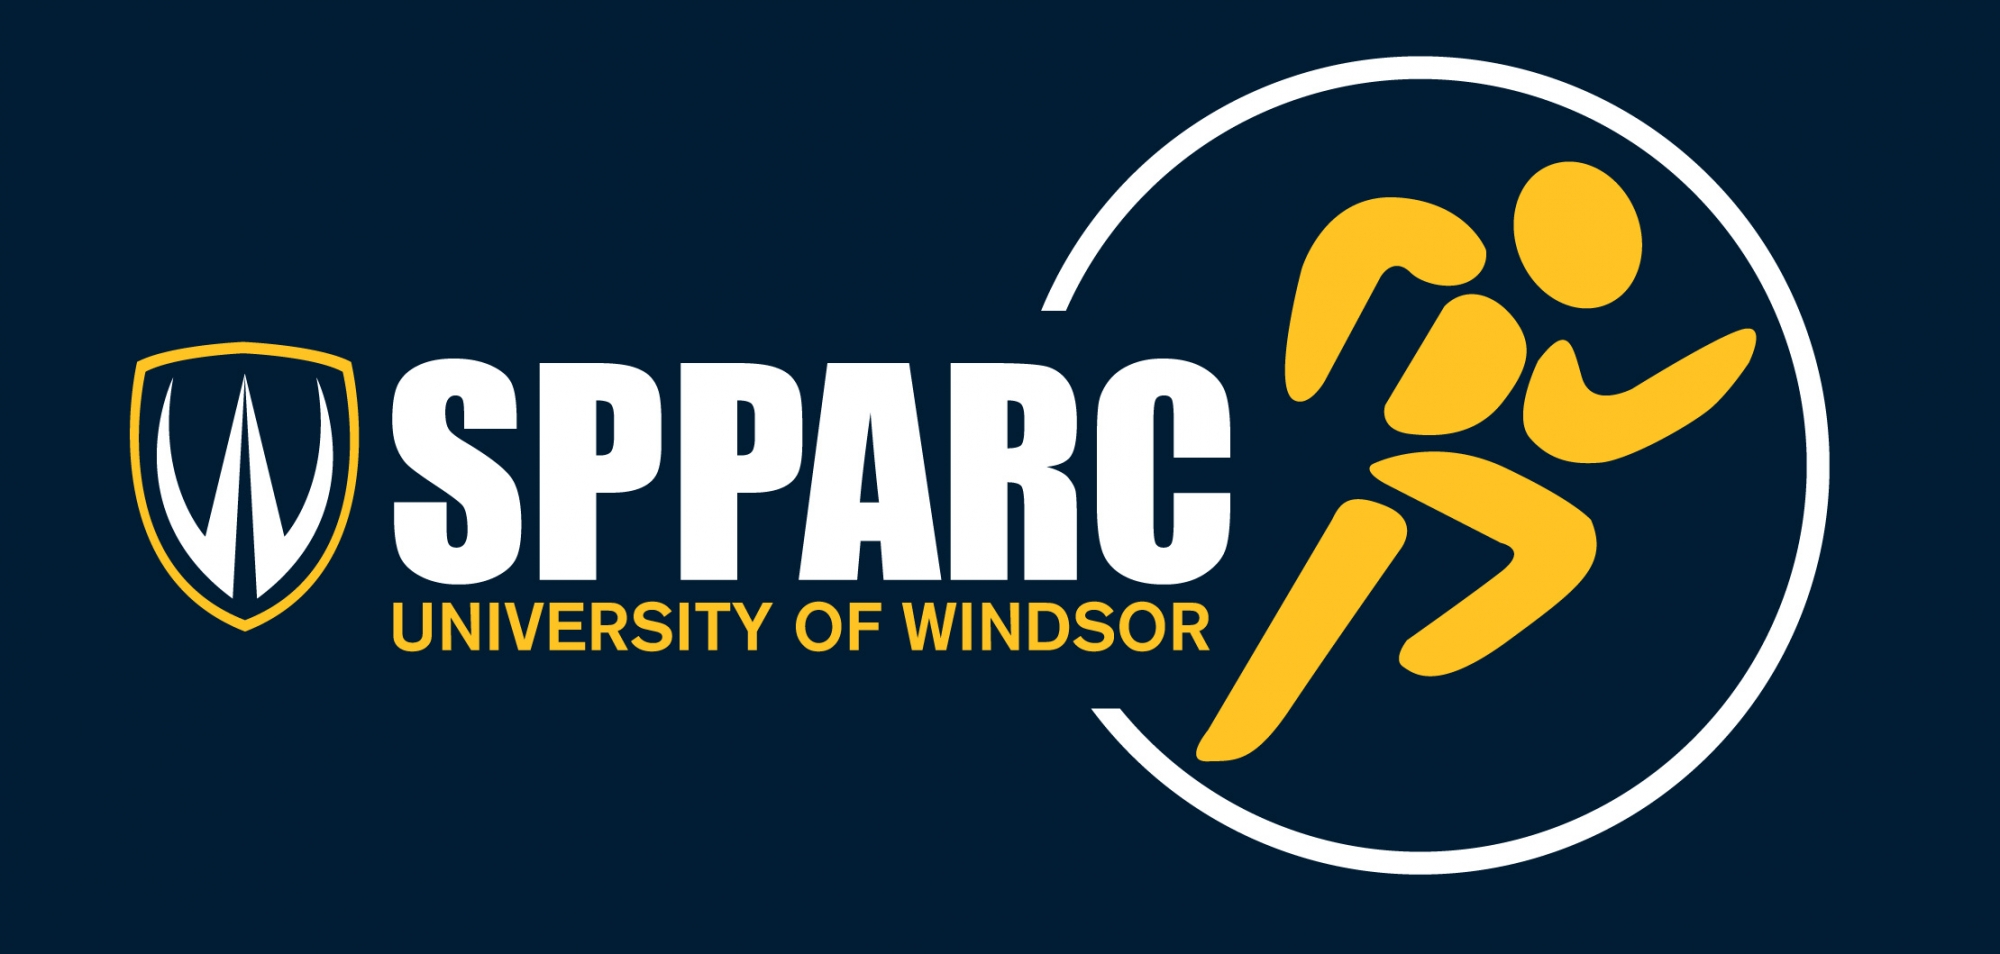 logo of University of Windsor Lancers shield and yellow human figure